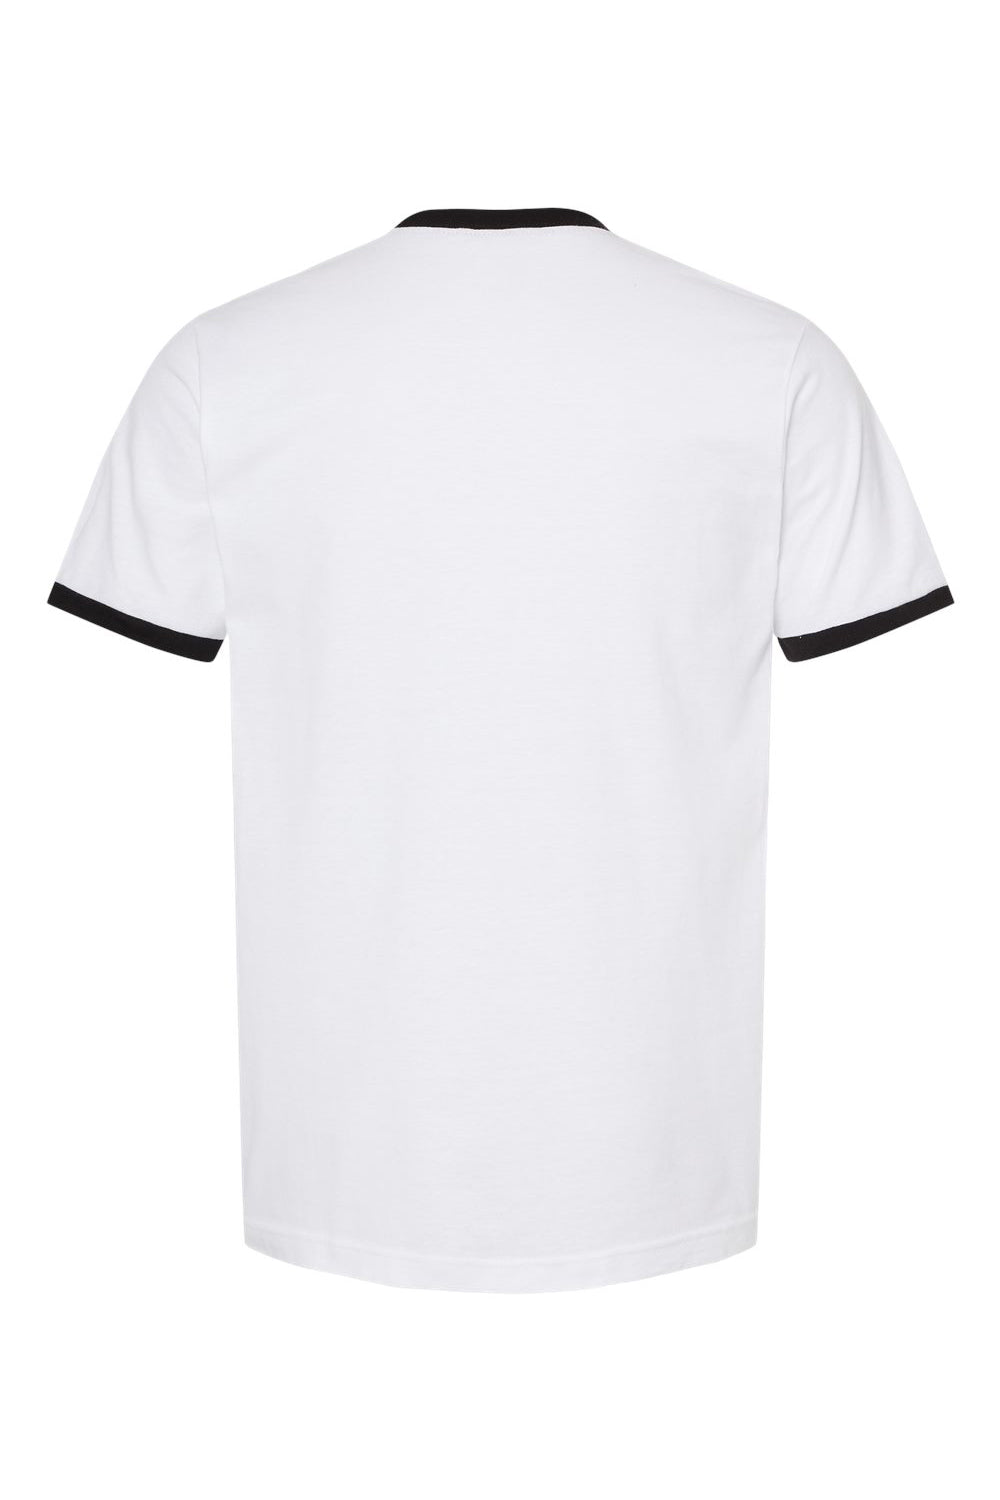 Tultex 246 Mens Fine Jersey Ringer Short Sleeve Crewneck T-Shirt White/Black Flat Back